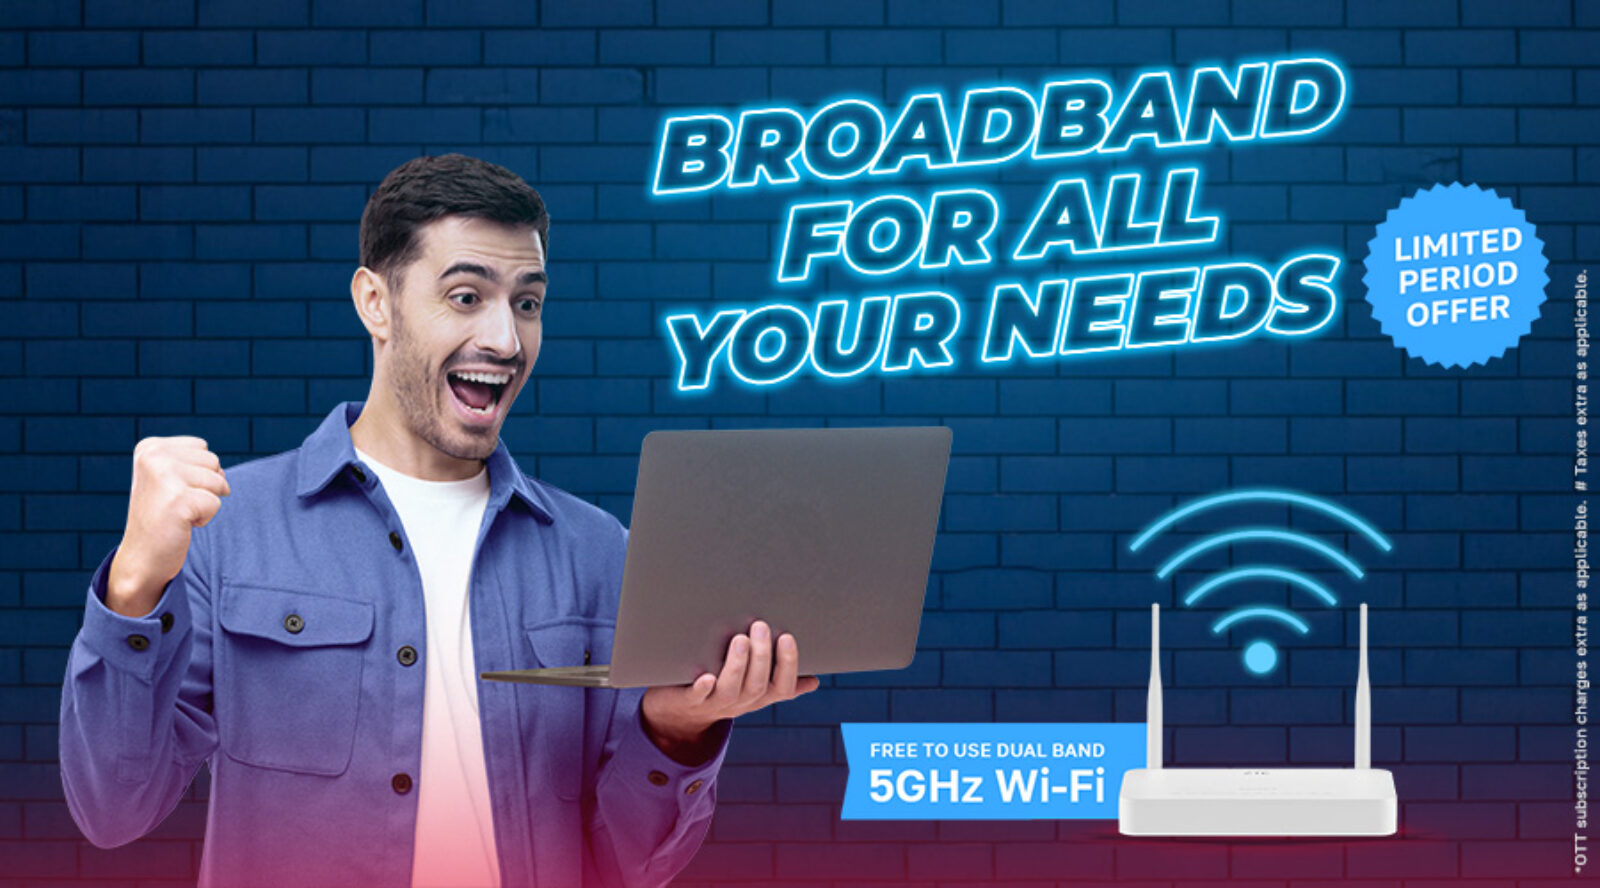 Consumer preferences for broadband in Mumbai and Bangalore